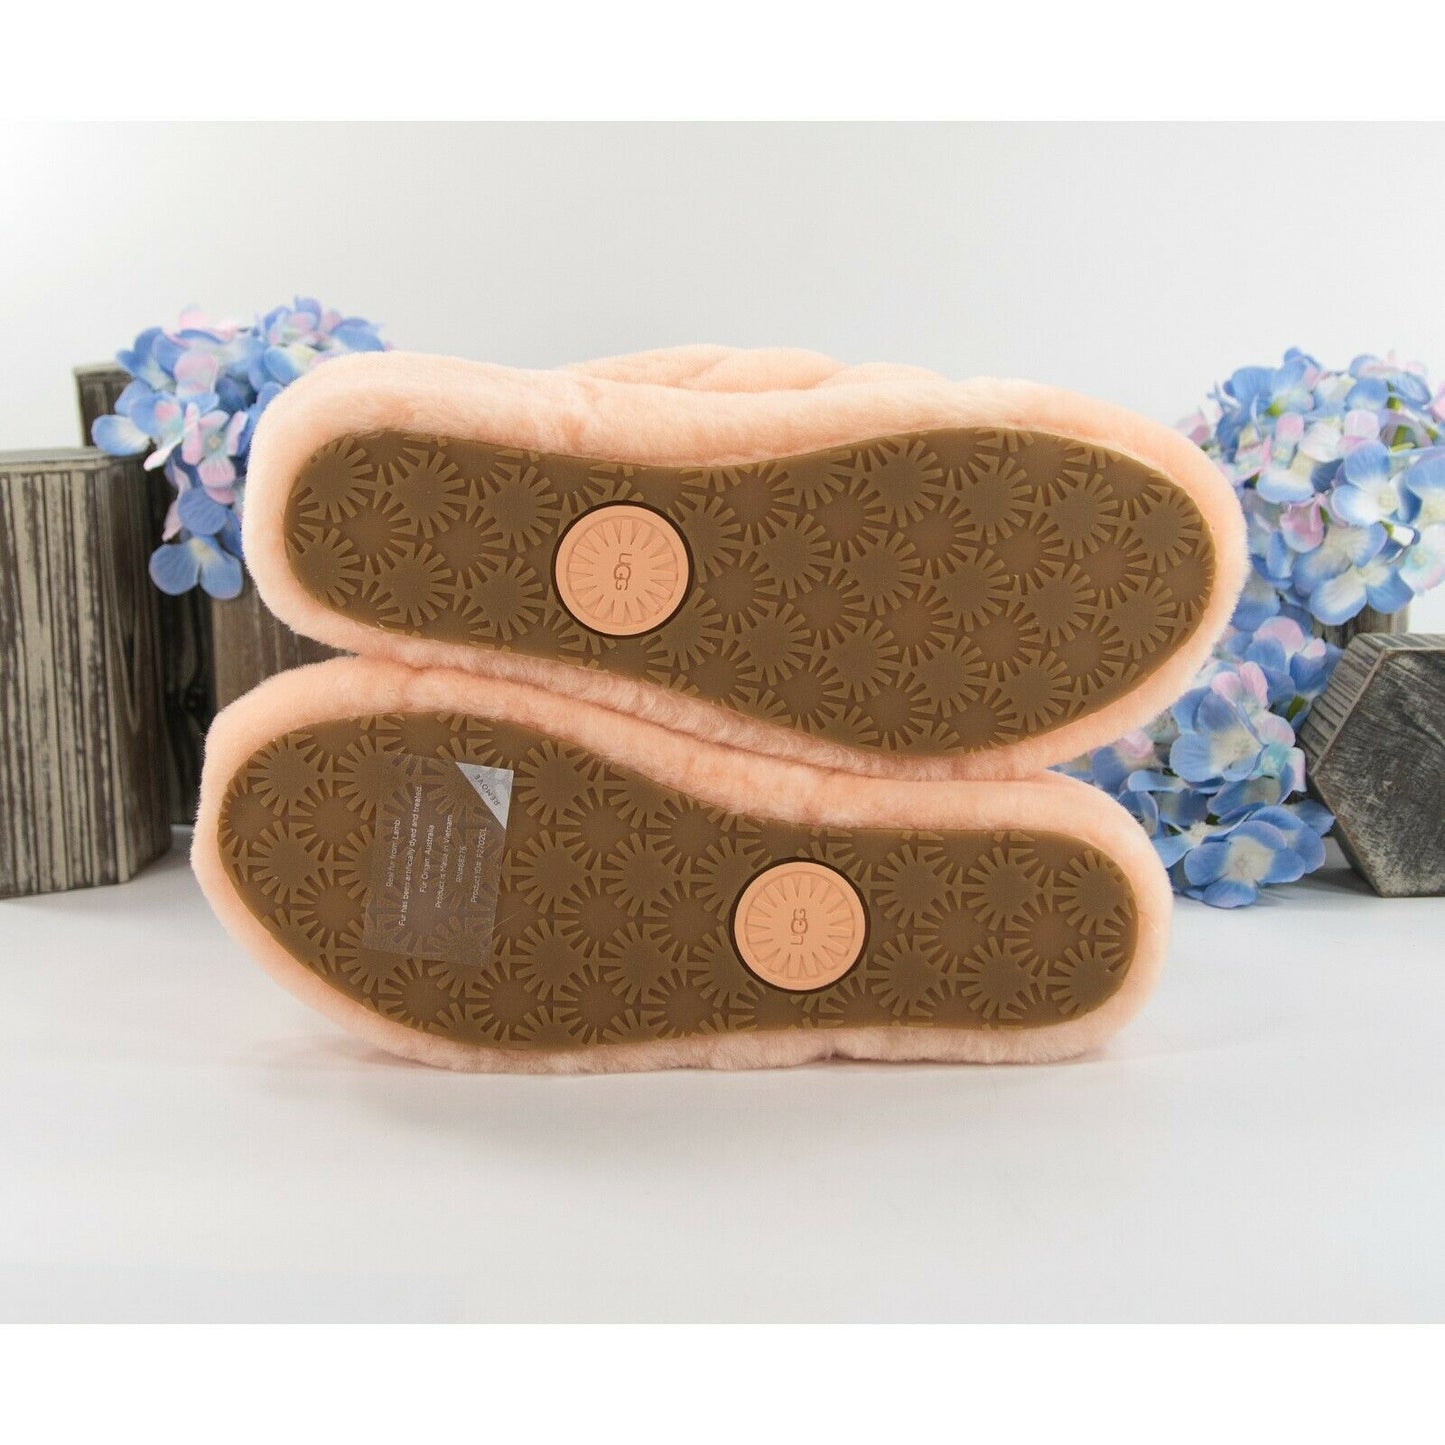 UGG Fluff Yea Peach Sheepskin Fur Slippers Slides Sandals Size 8 NIB